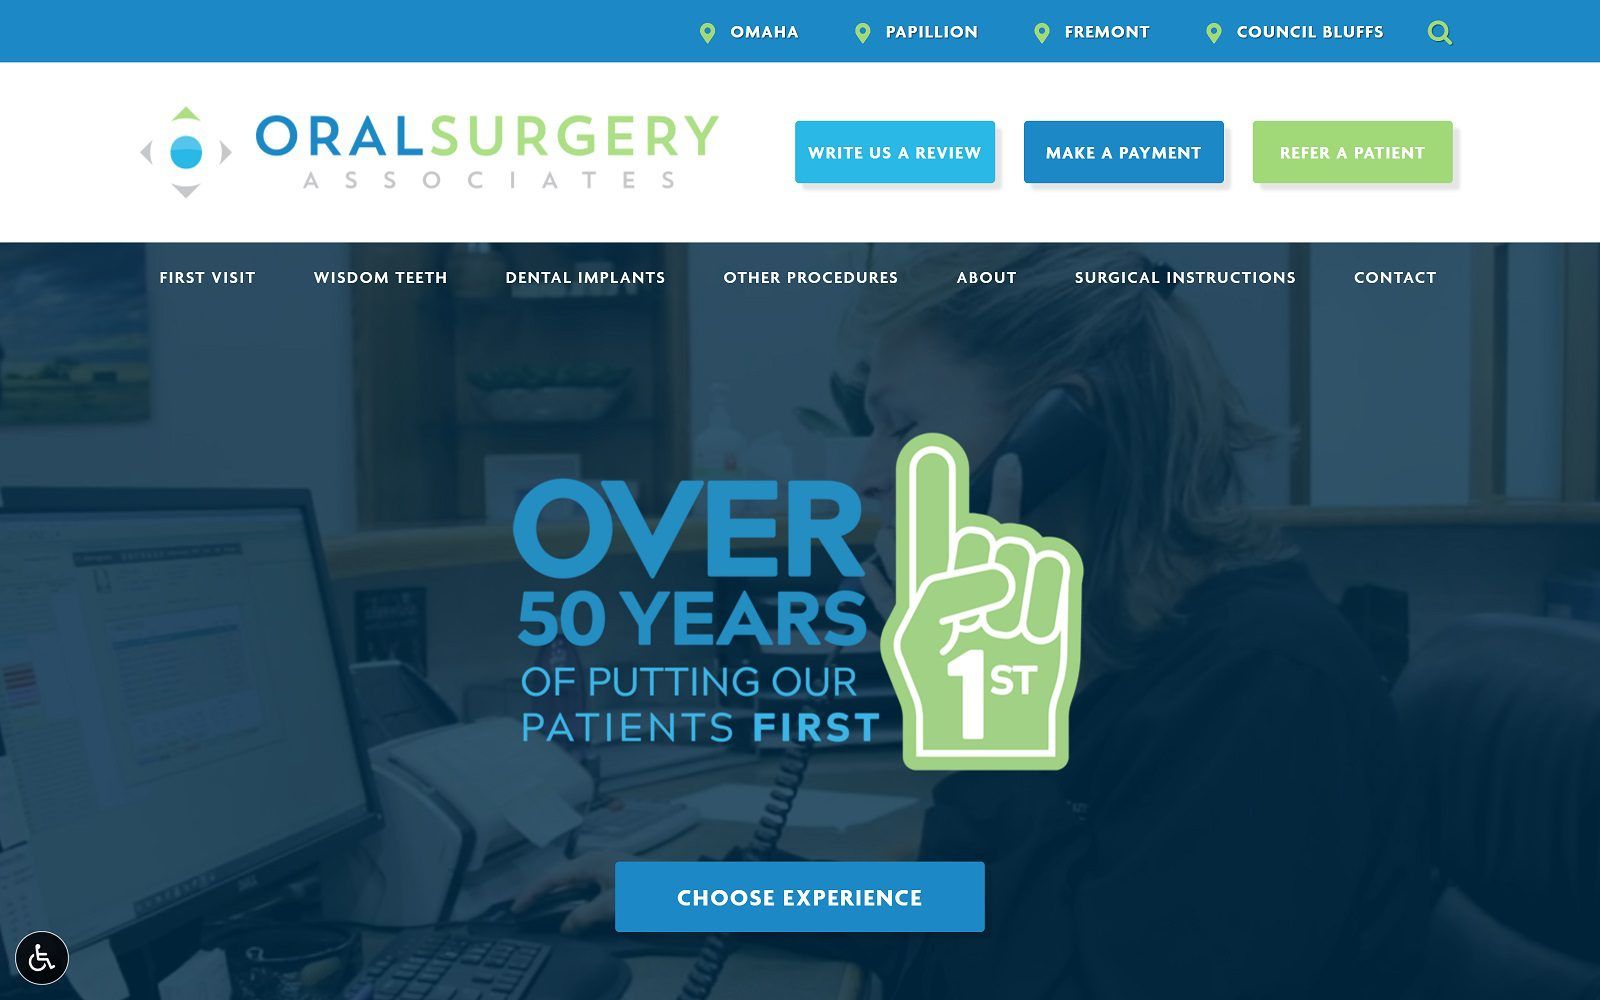 The screenshot of oral surgery associates website